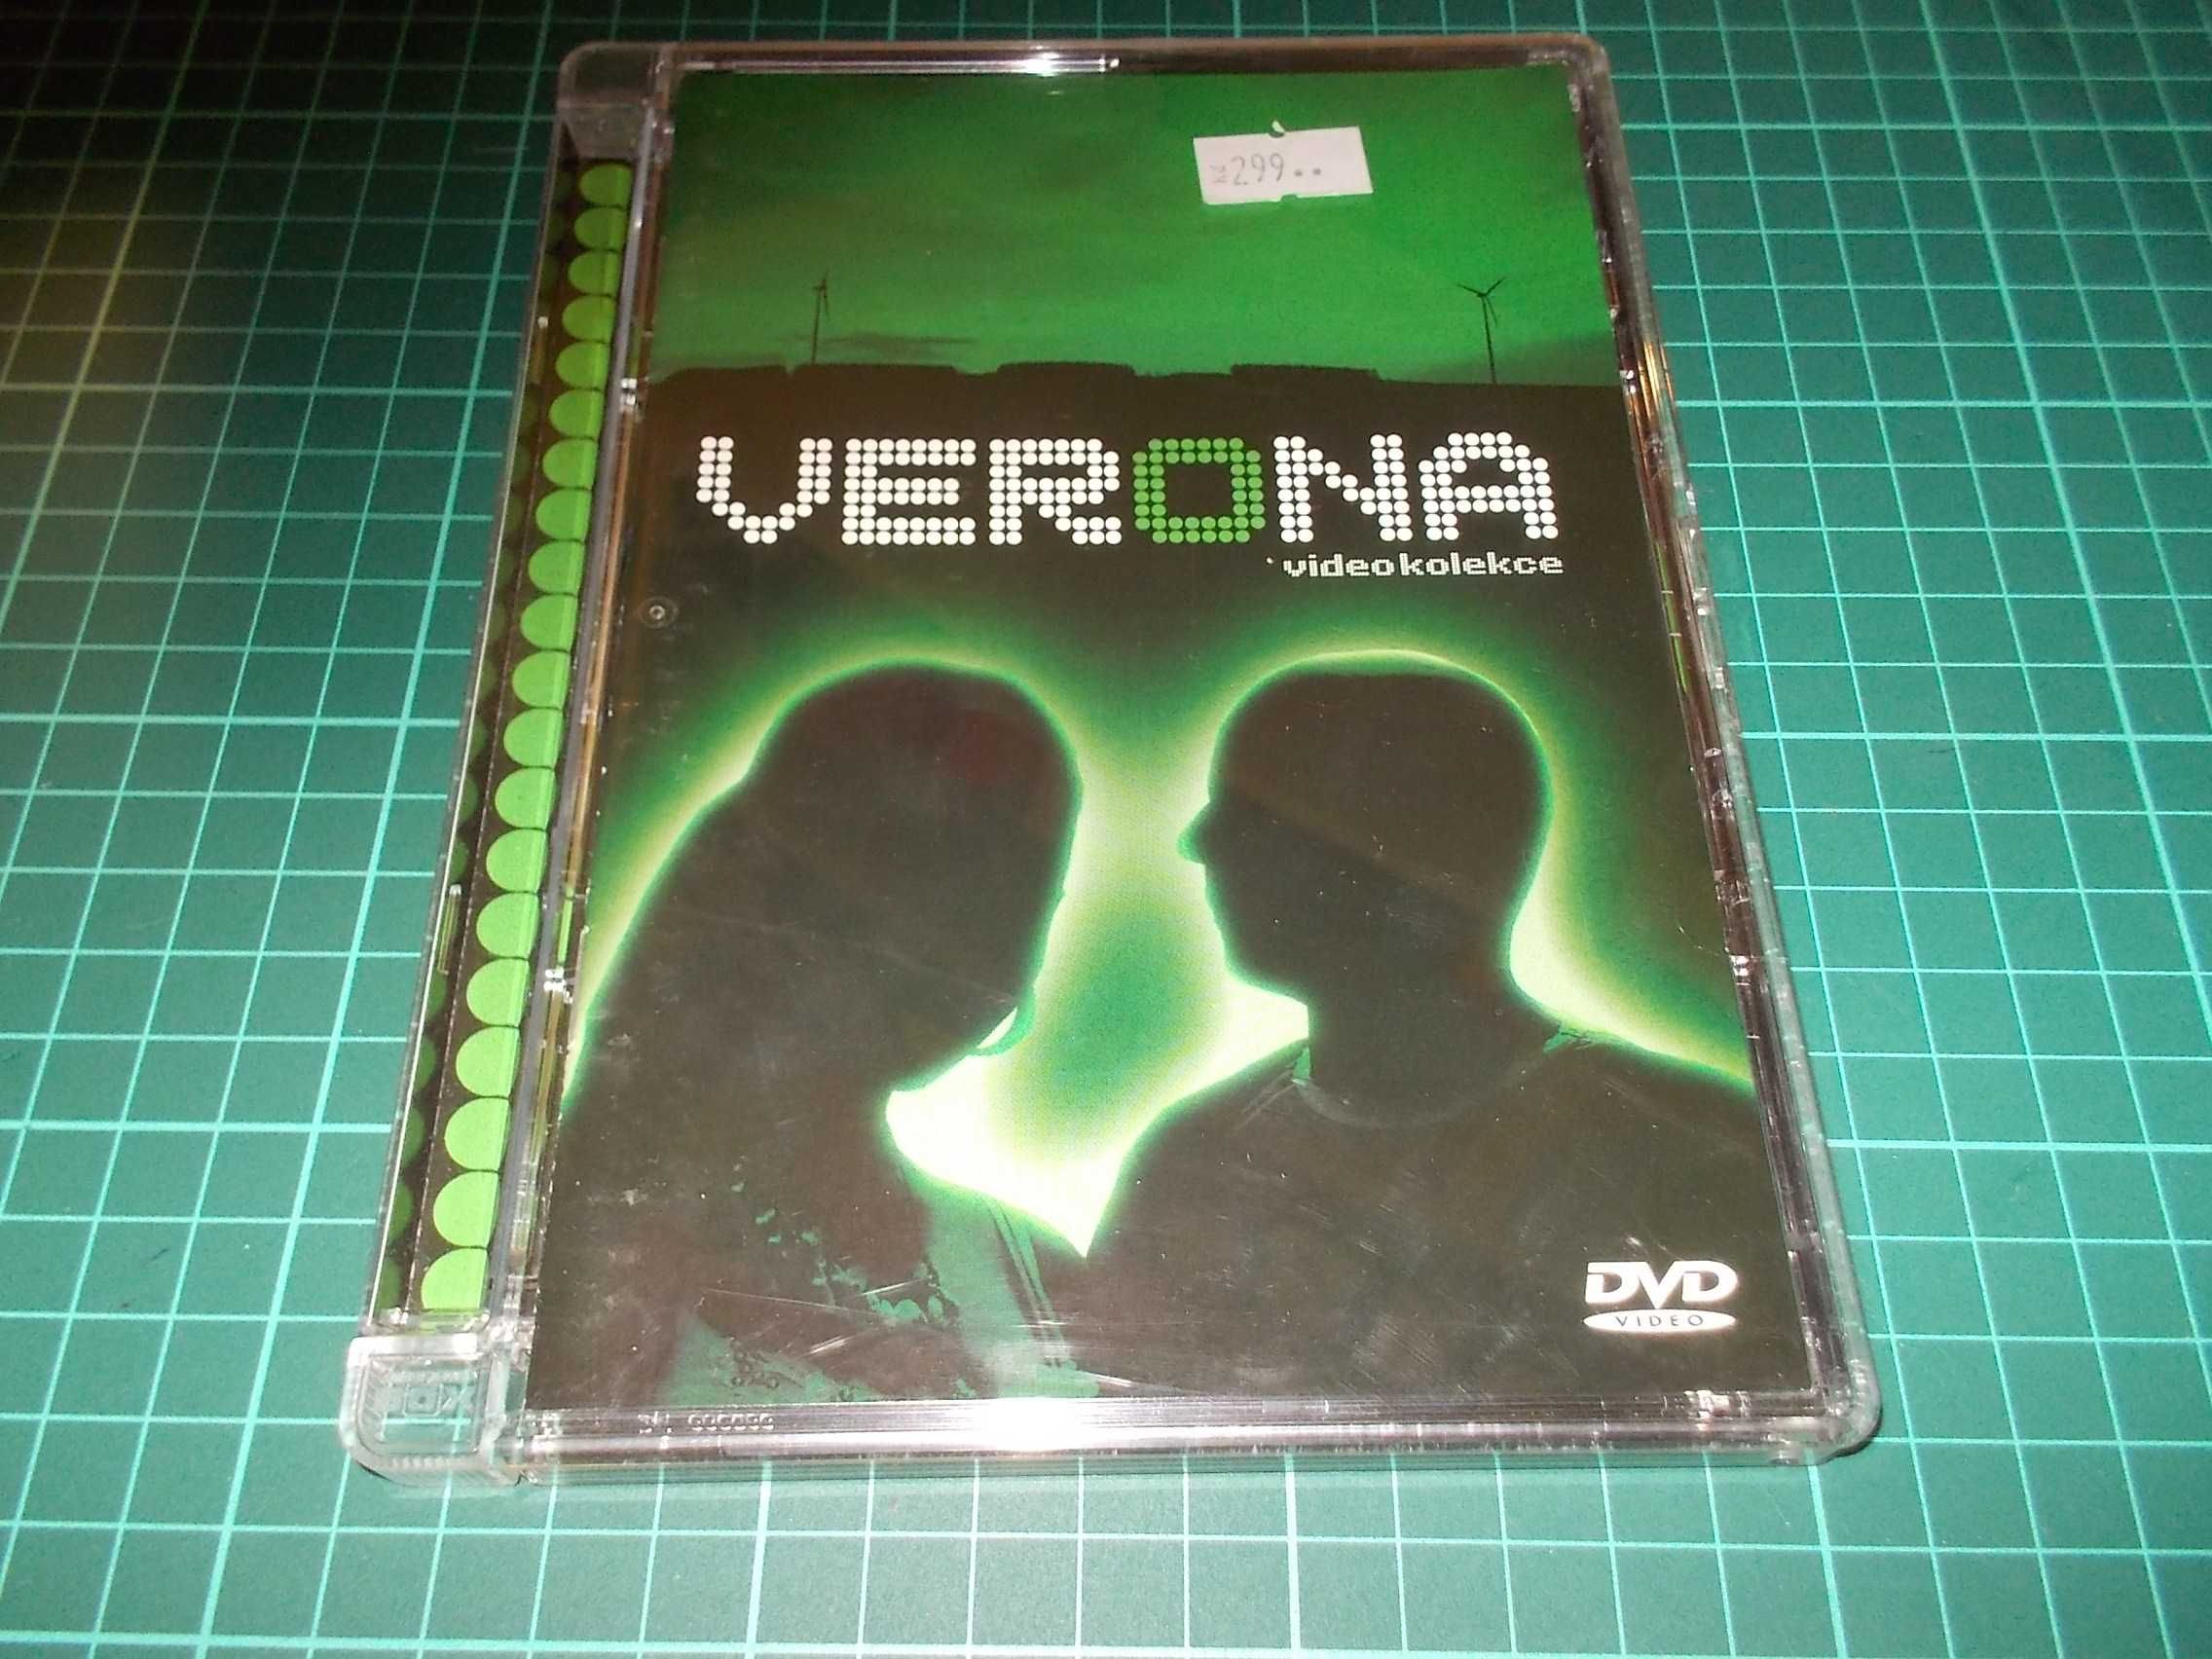 Verona - Videokolekce na DVD - Dance Trance Eurodisco